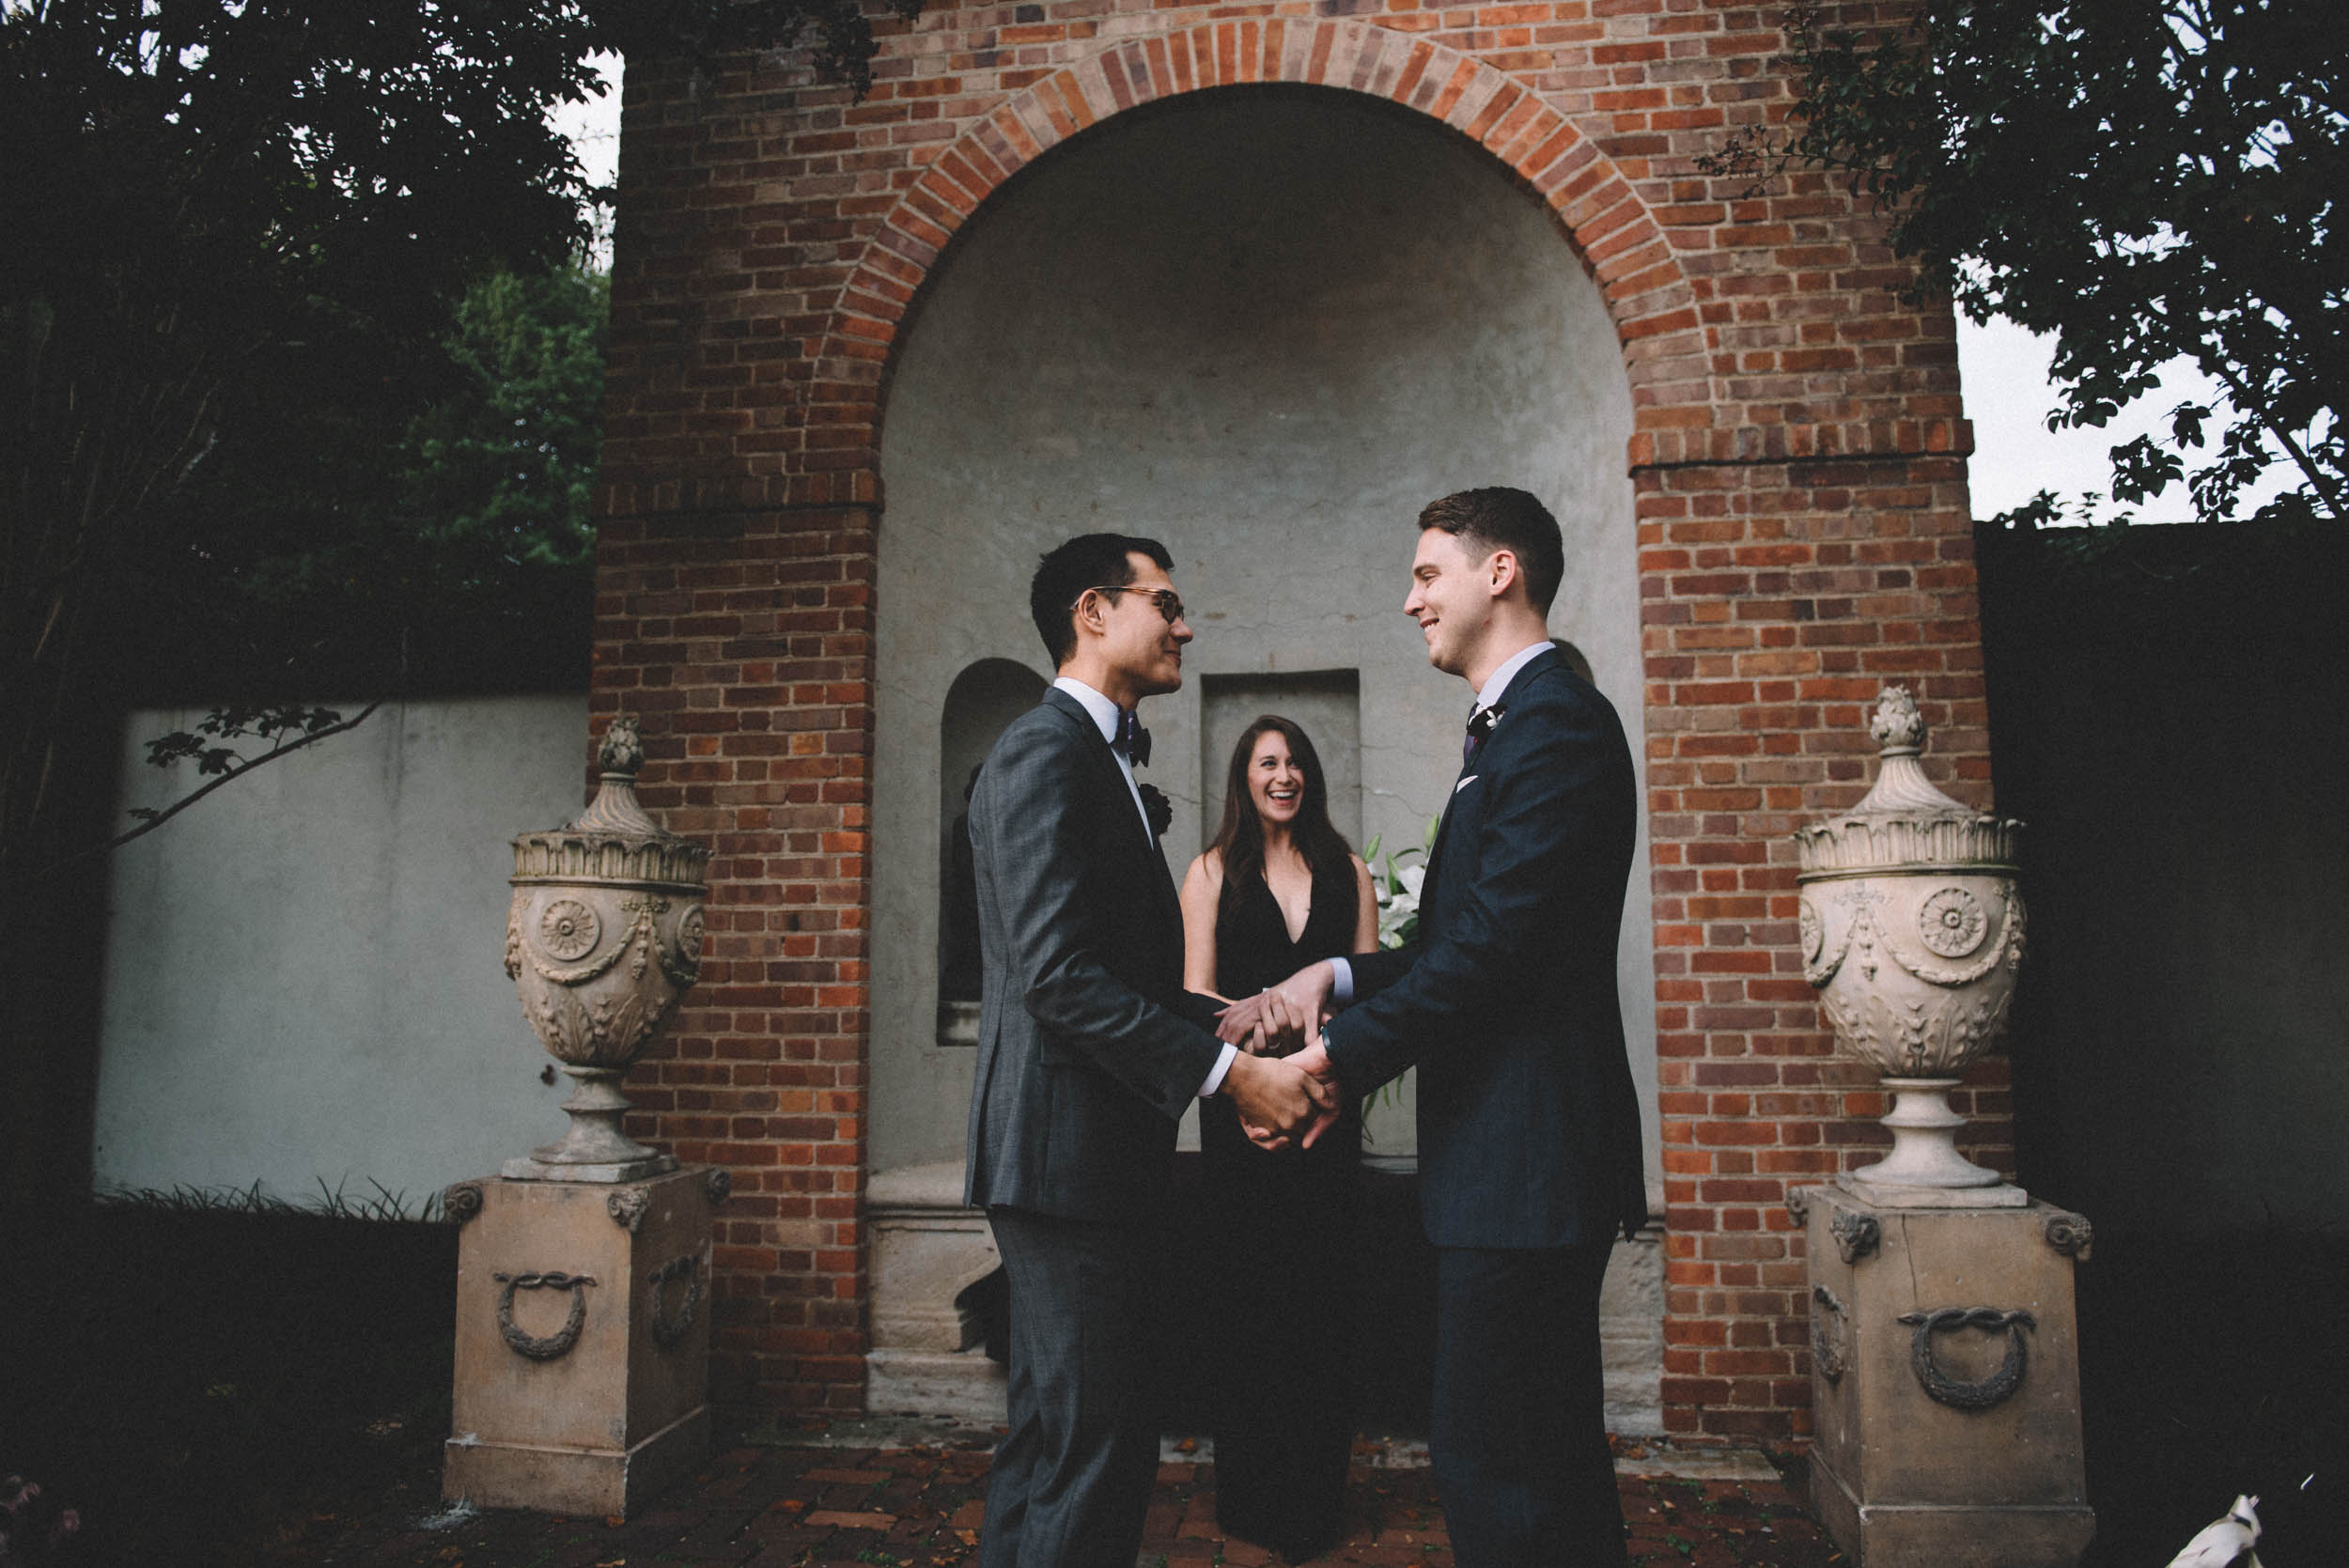 Dumbarton-House-wedding-47.jpg